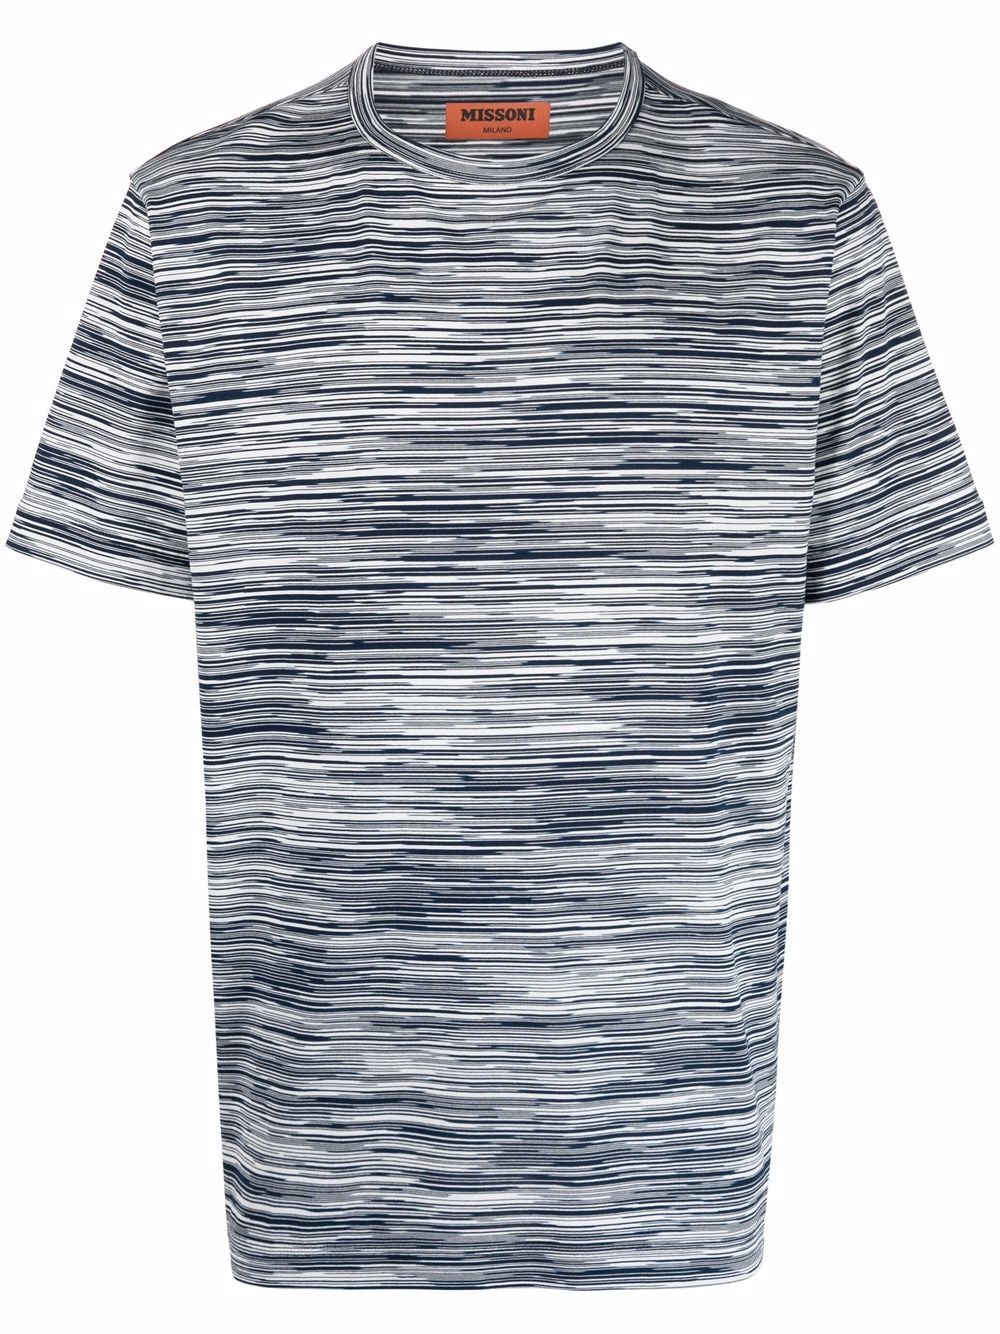 Missoni marled striped T-shirt - Blue von Missoni